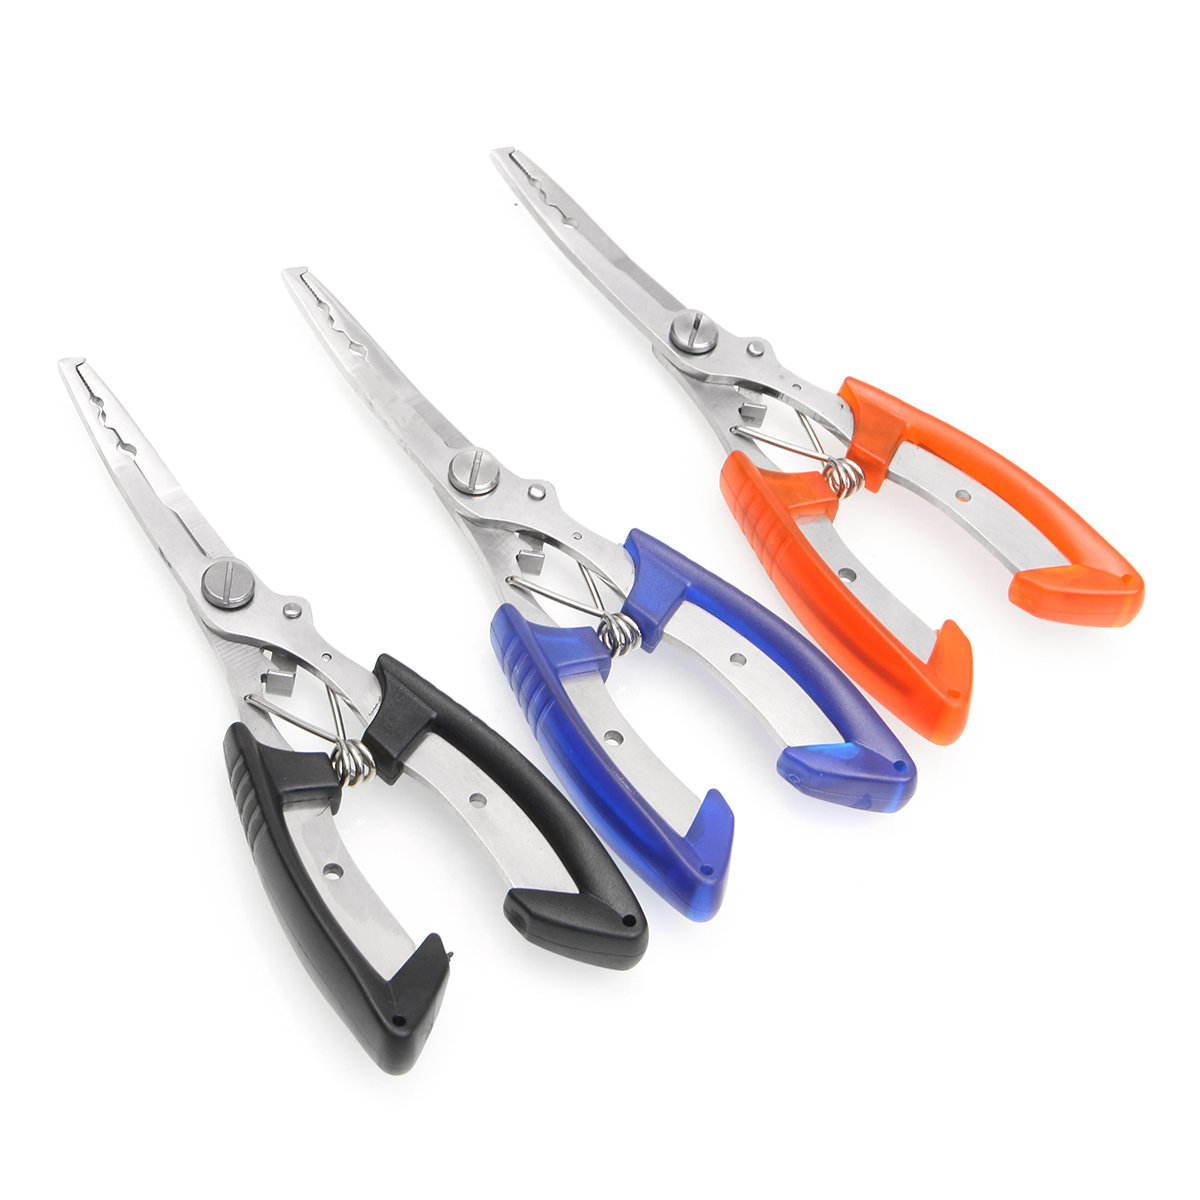 Stainless-Steel-Fishing-Pliers-Plierweiter-Scissors-Line-Cutter-Hook-Tackle-Tool-1151463-1